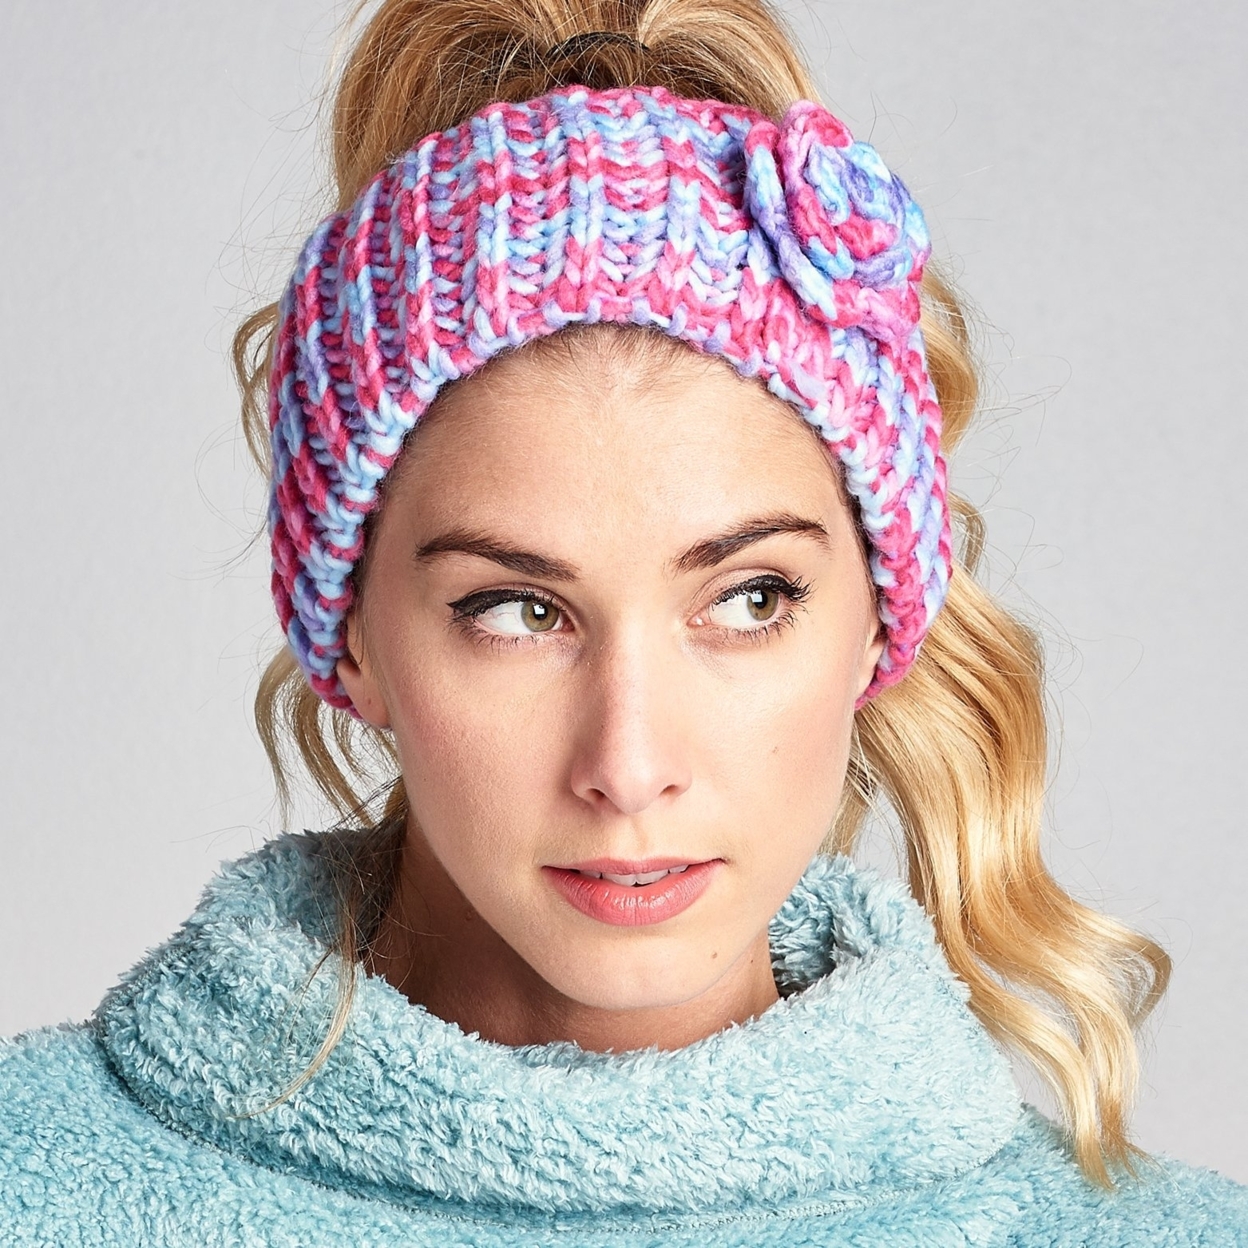 Crochet Knit Floral Headband - Pink/purple